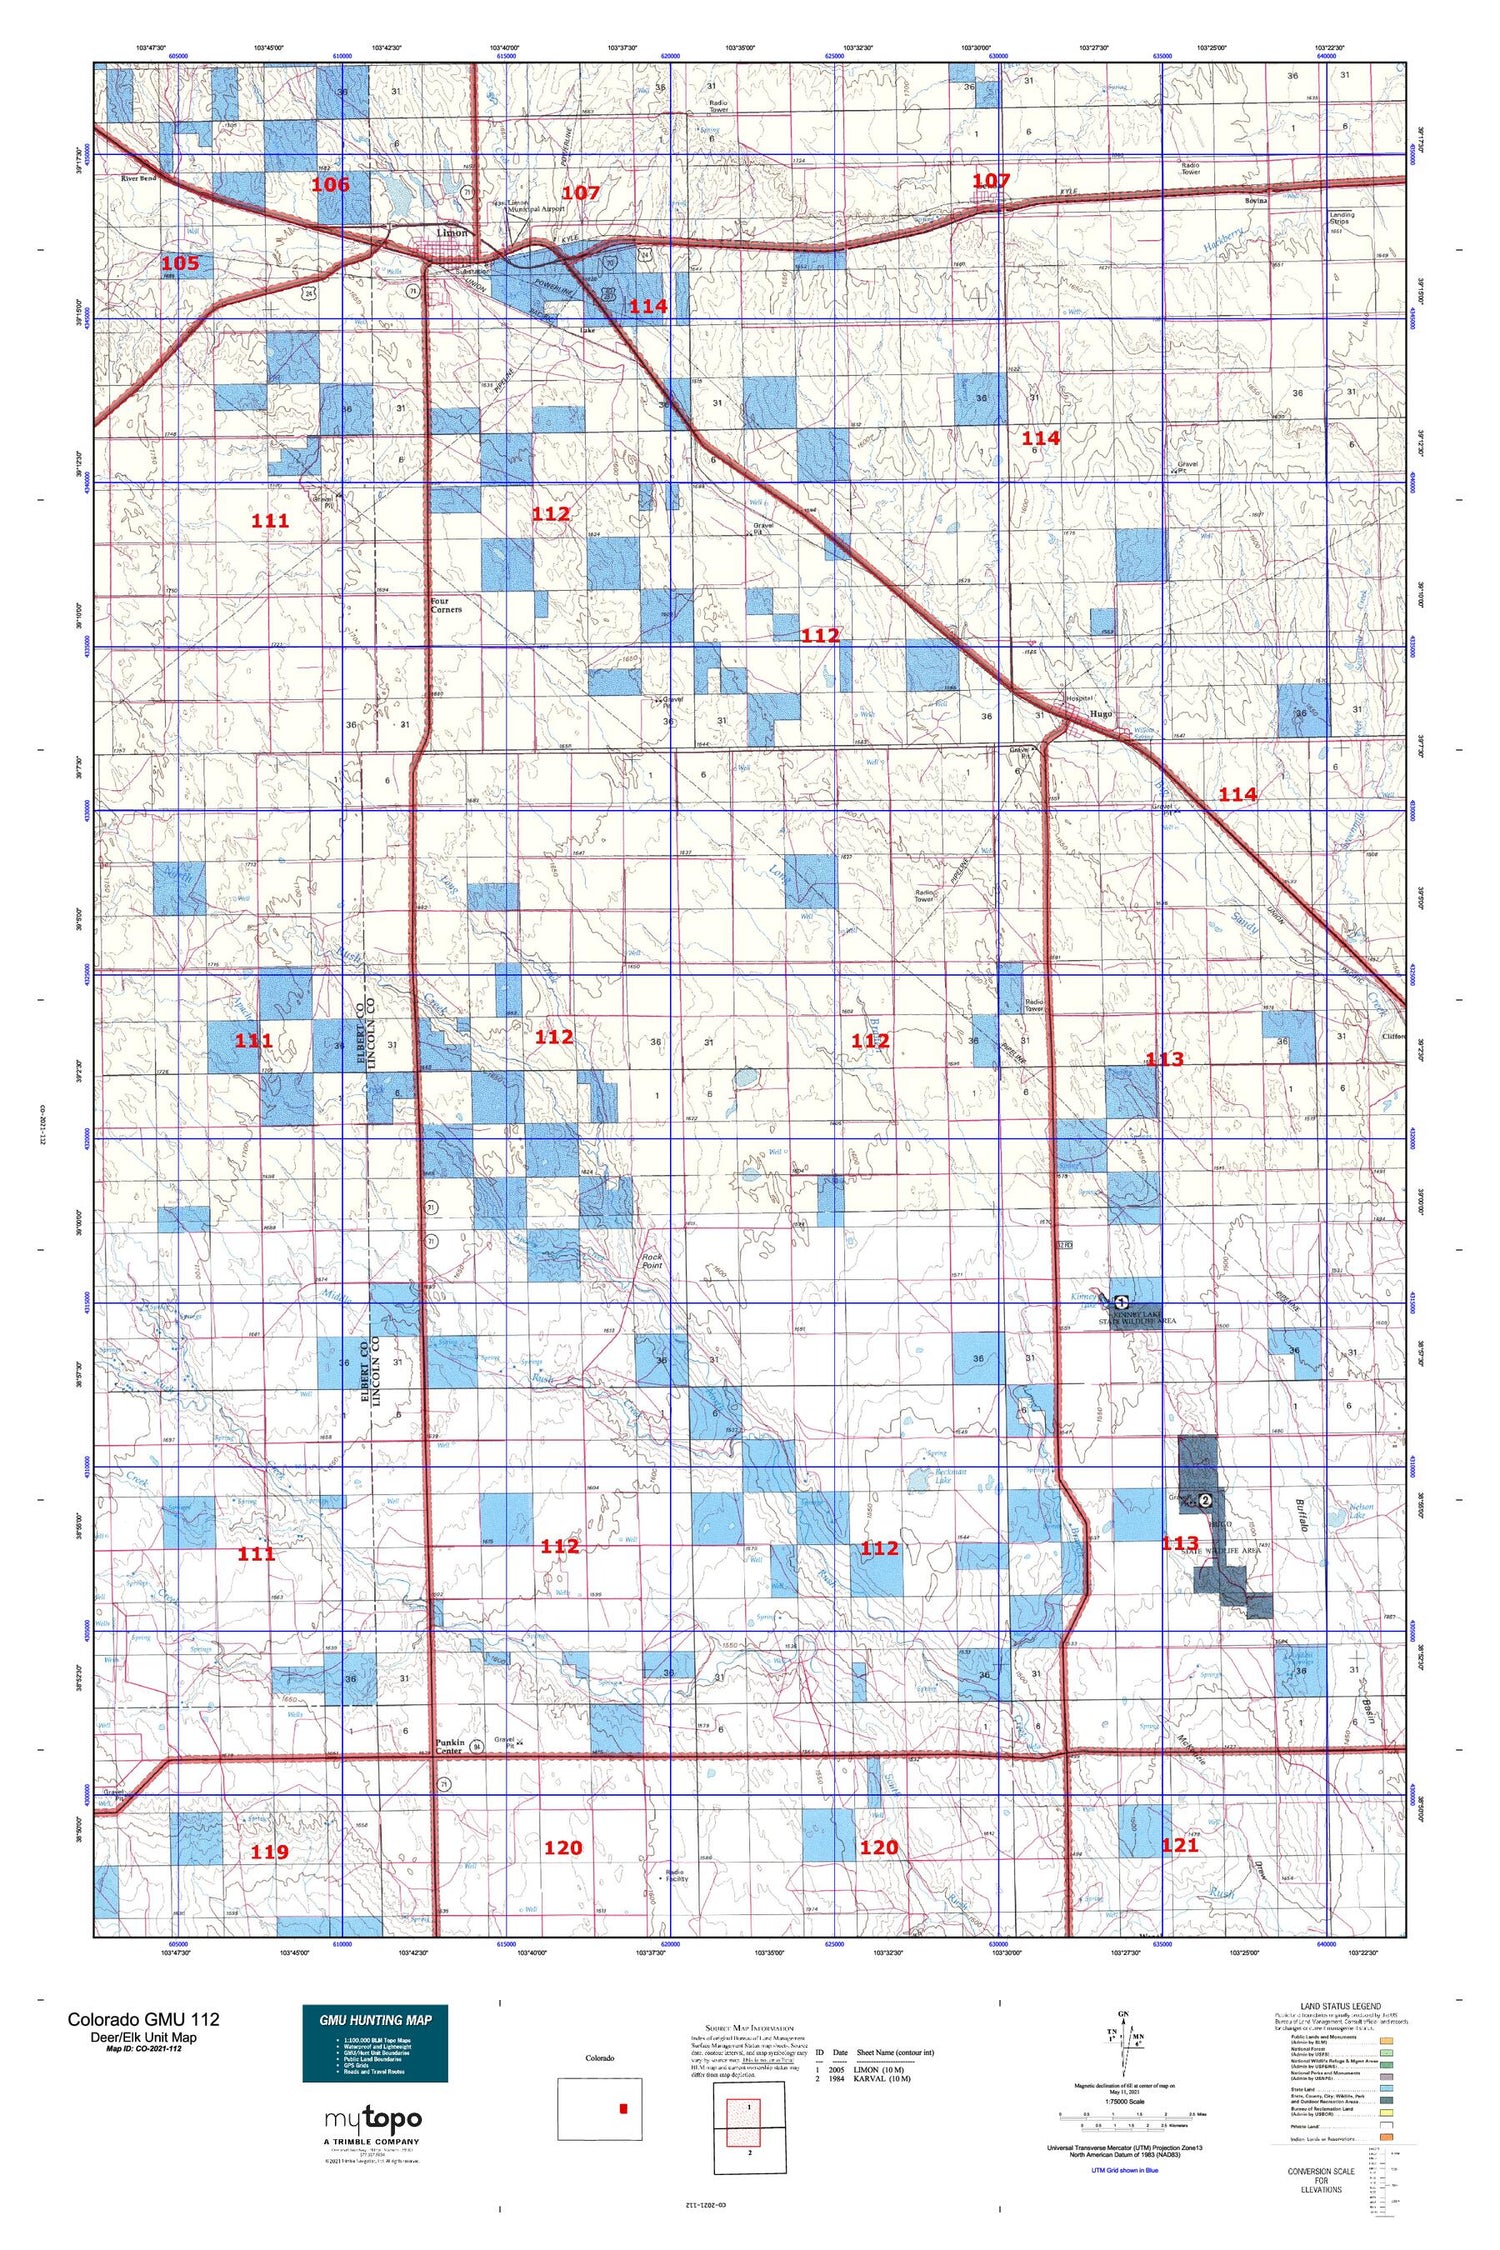 Colorado GMU 112 Map Image